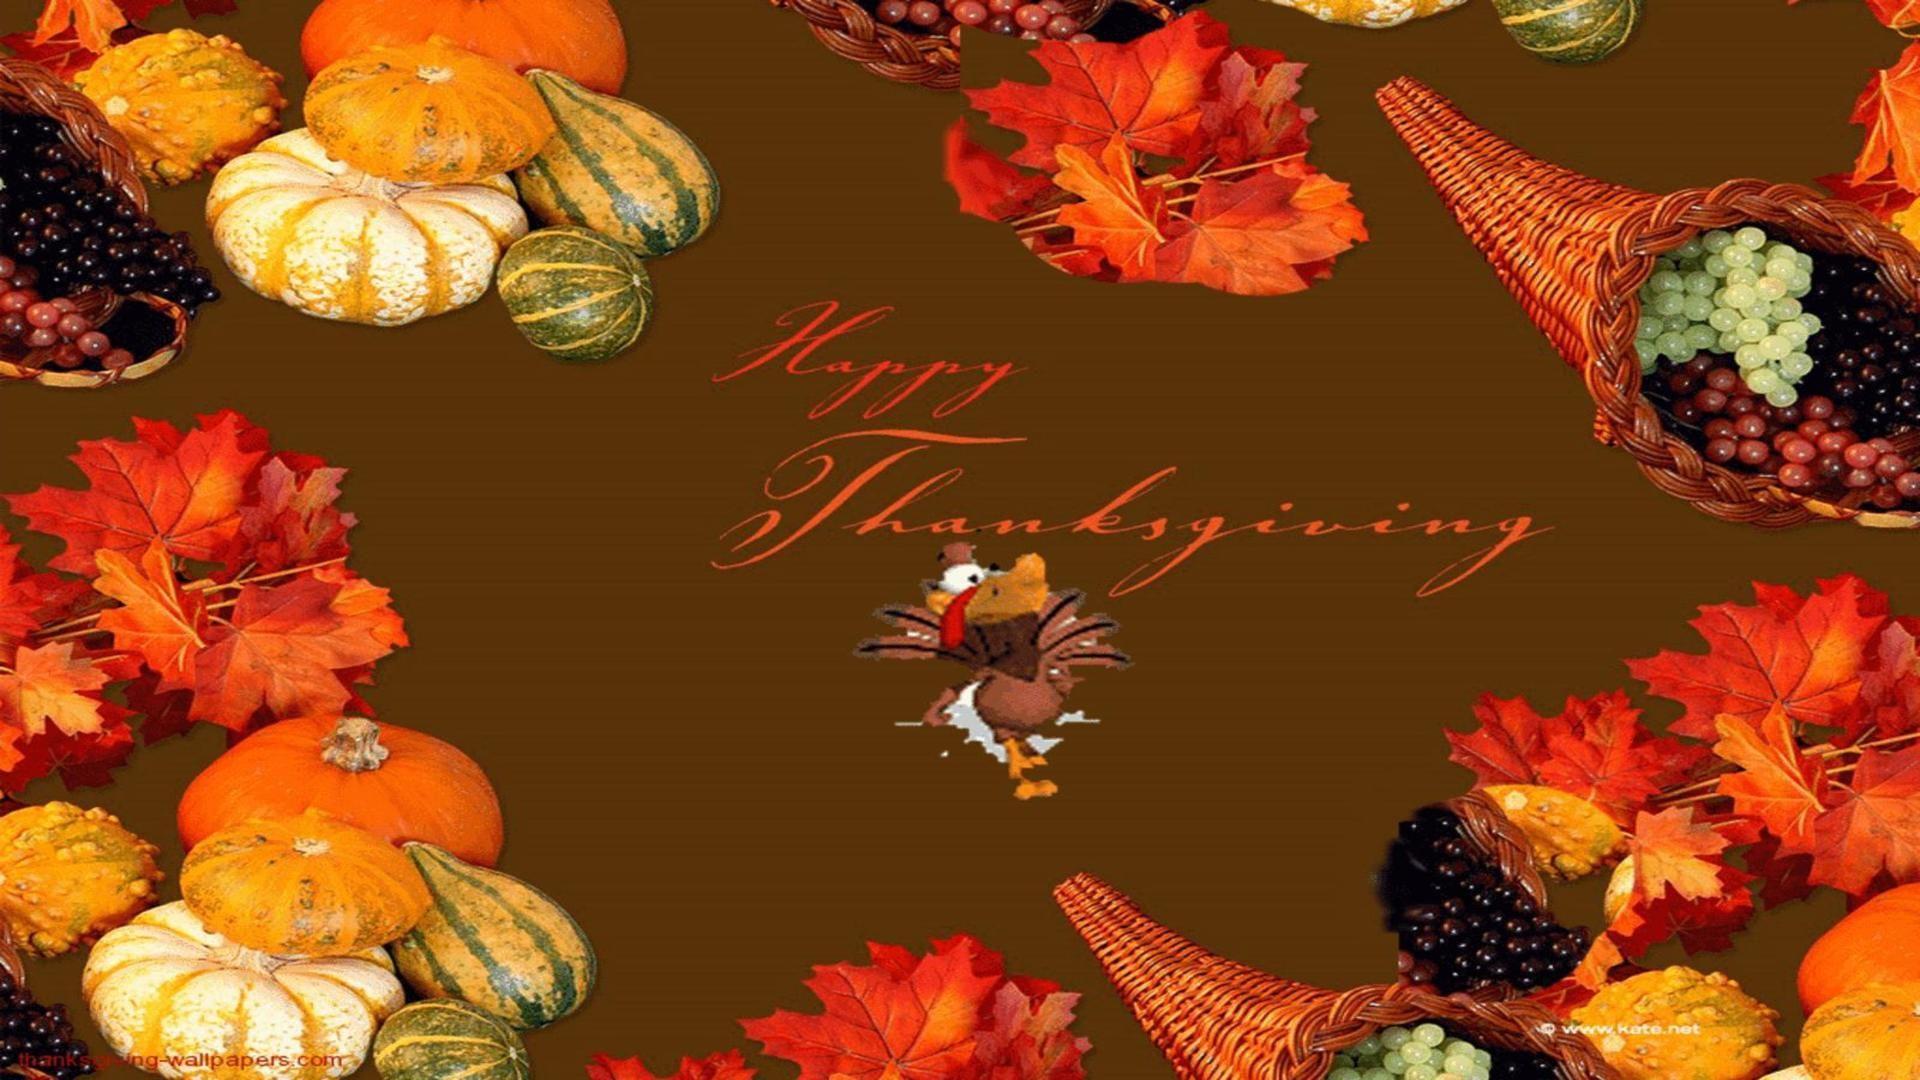 Happy thanksgiving day free greeting card free desktop background